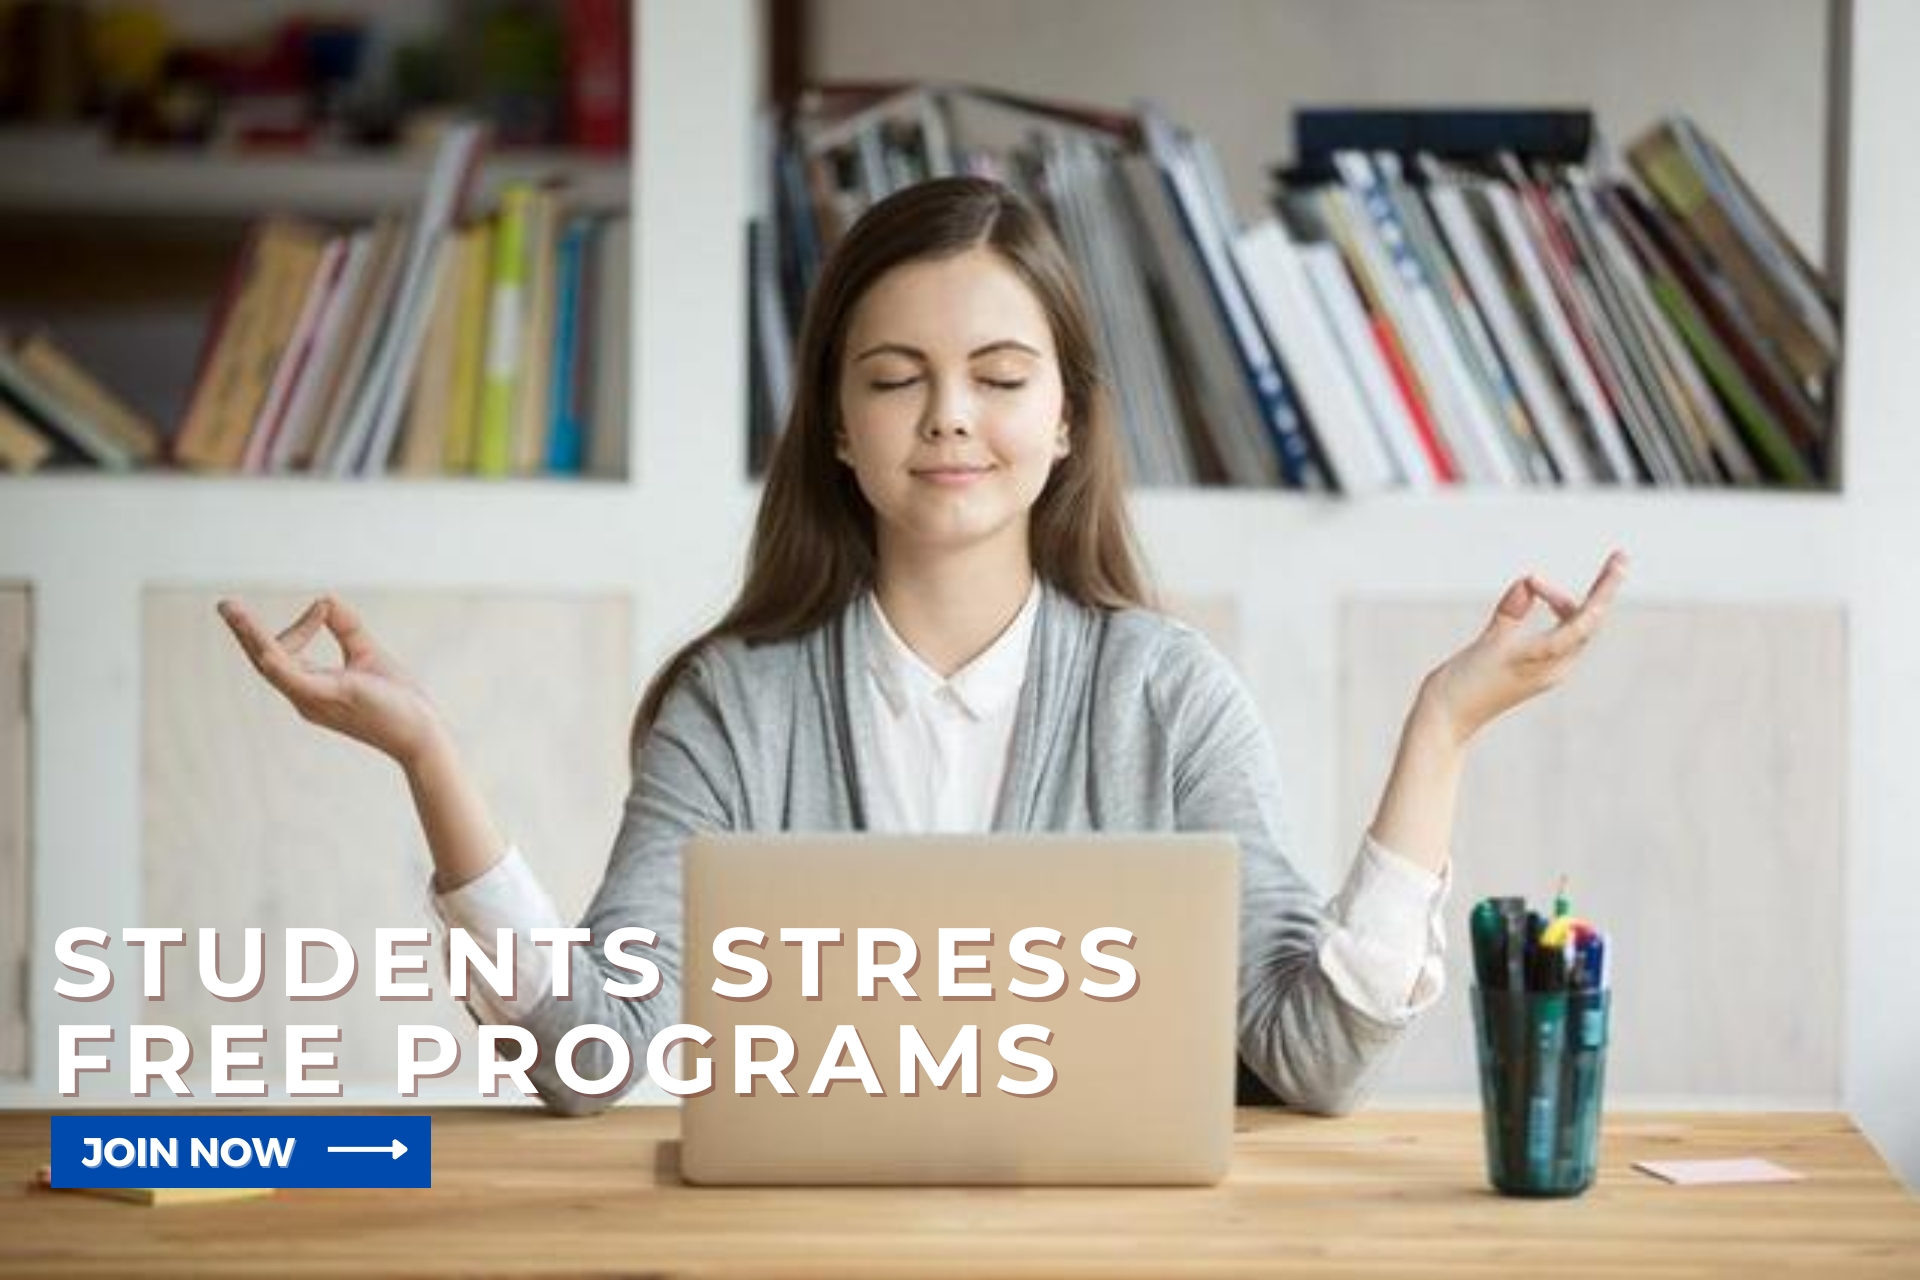 Student stress-free programs